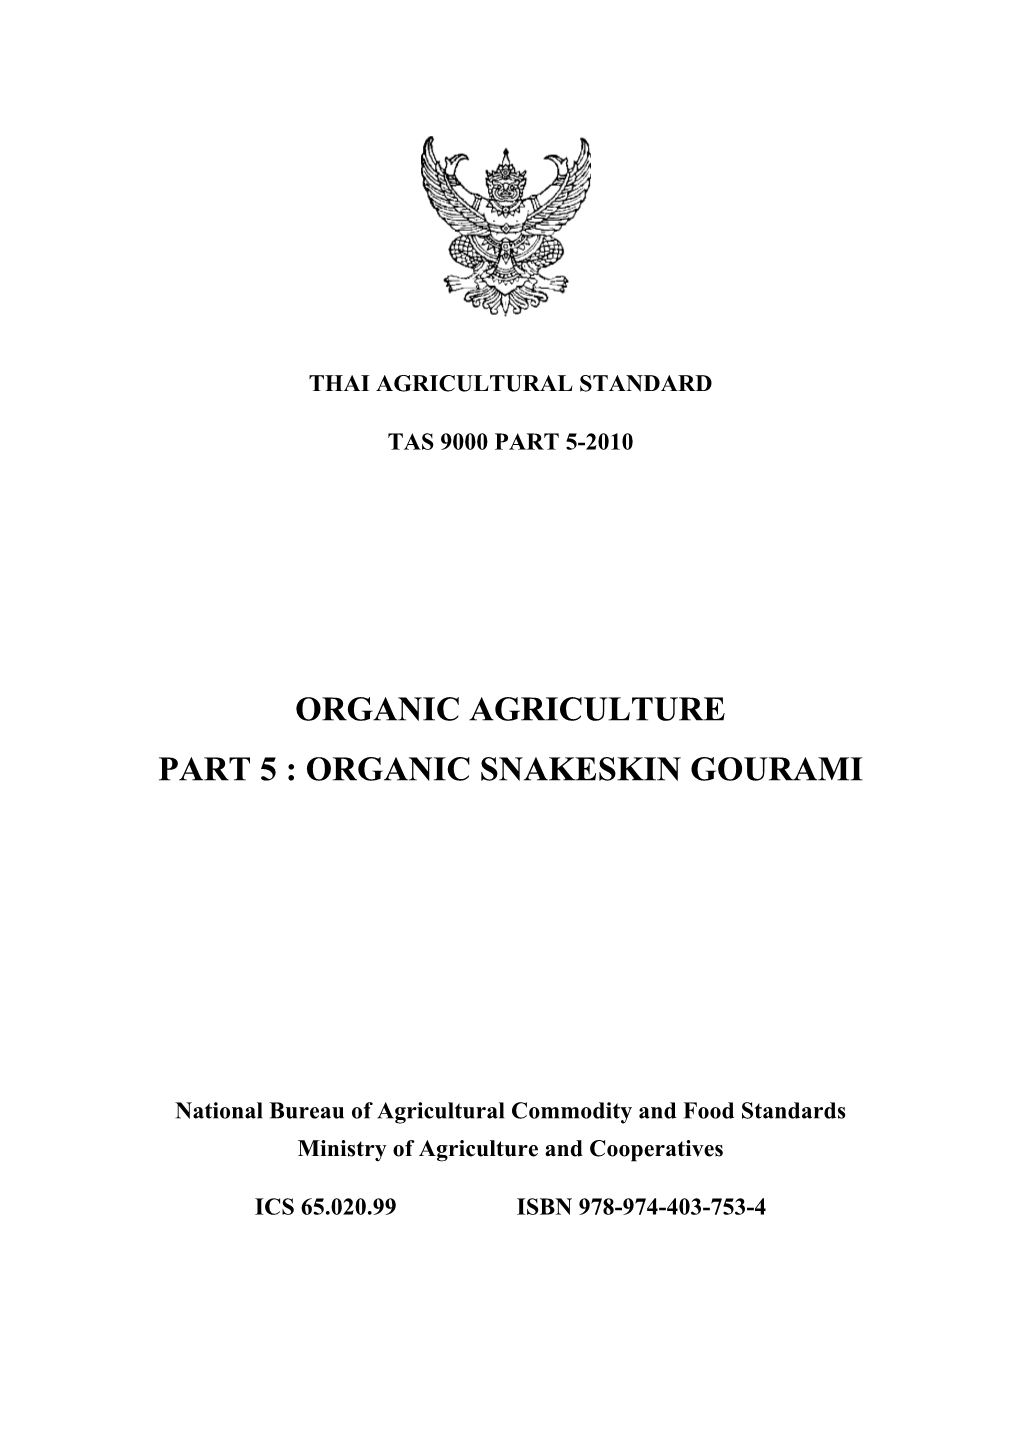 Organic Agriculture Part 5 : Organic Snakeskin Gourami